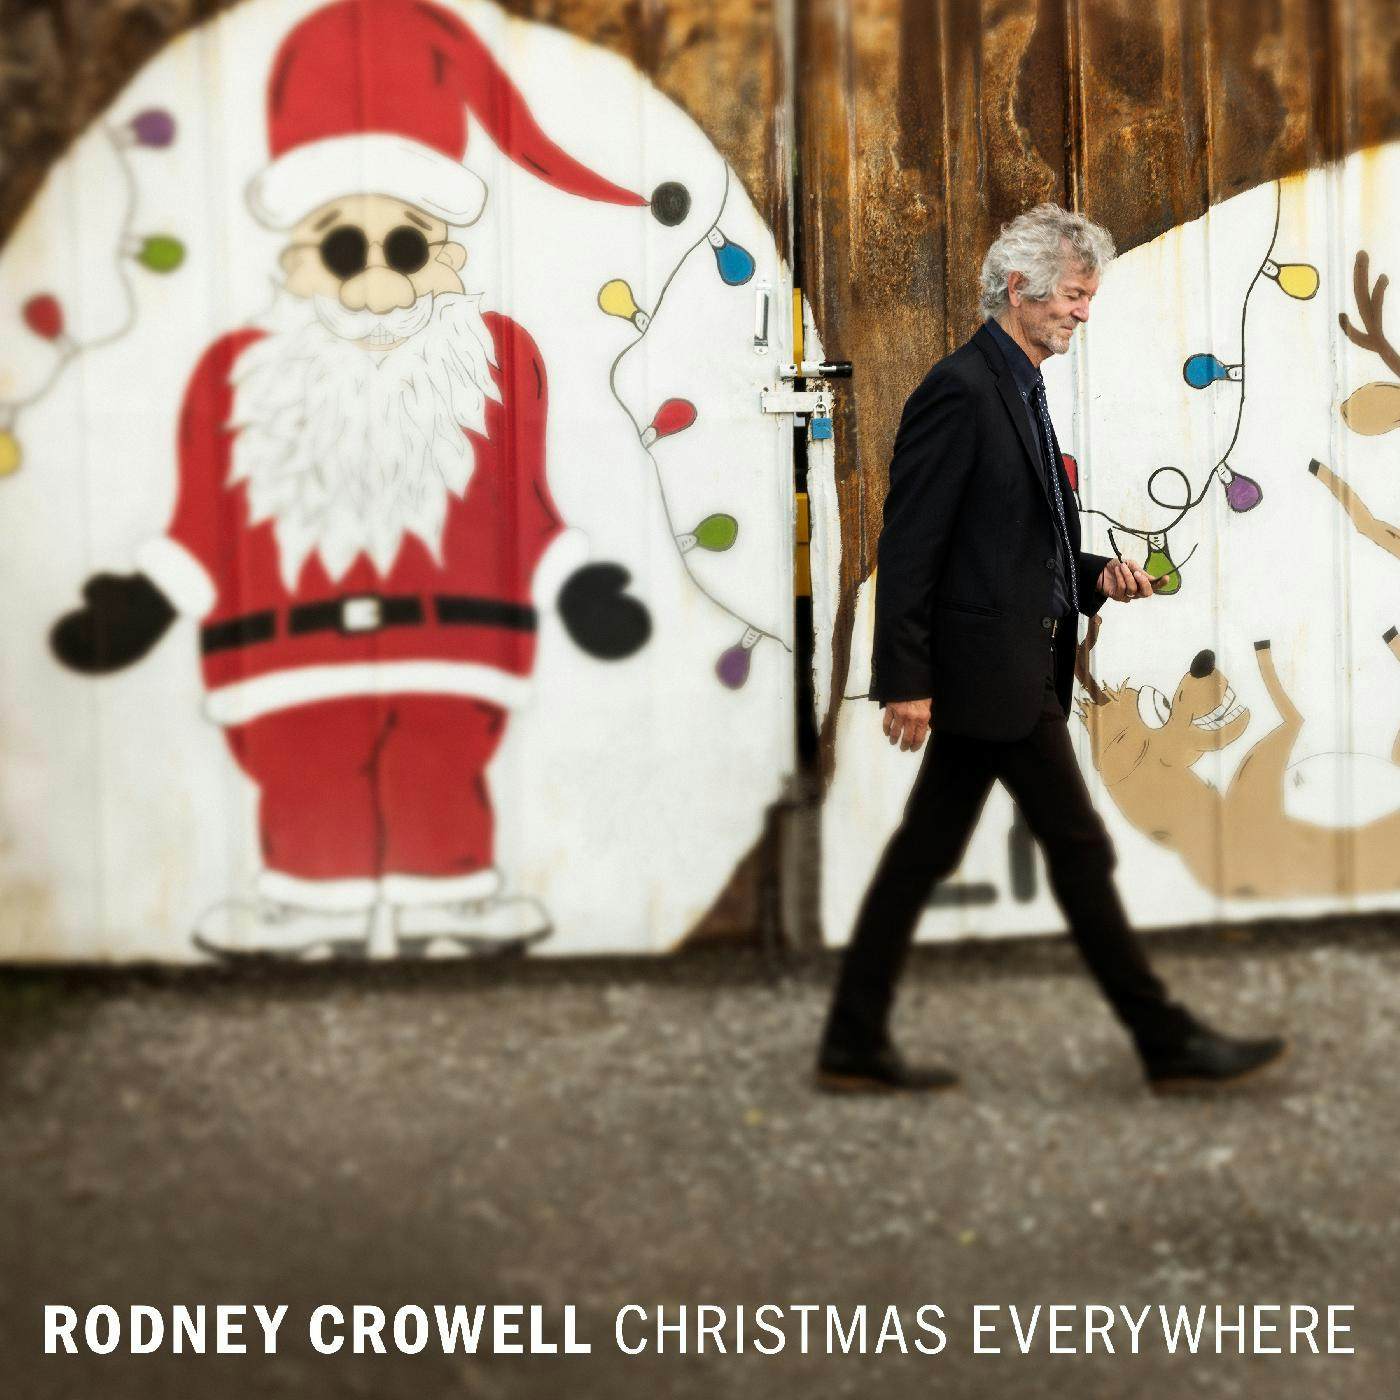 Rodney Crowell Christmas Everywhere Vinyl Record